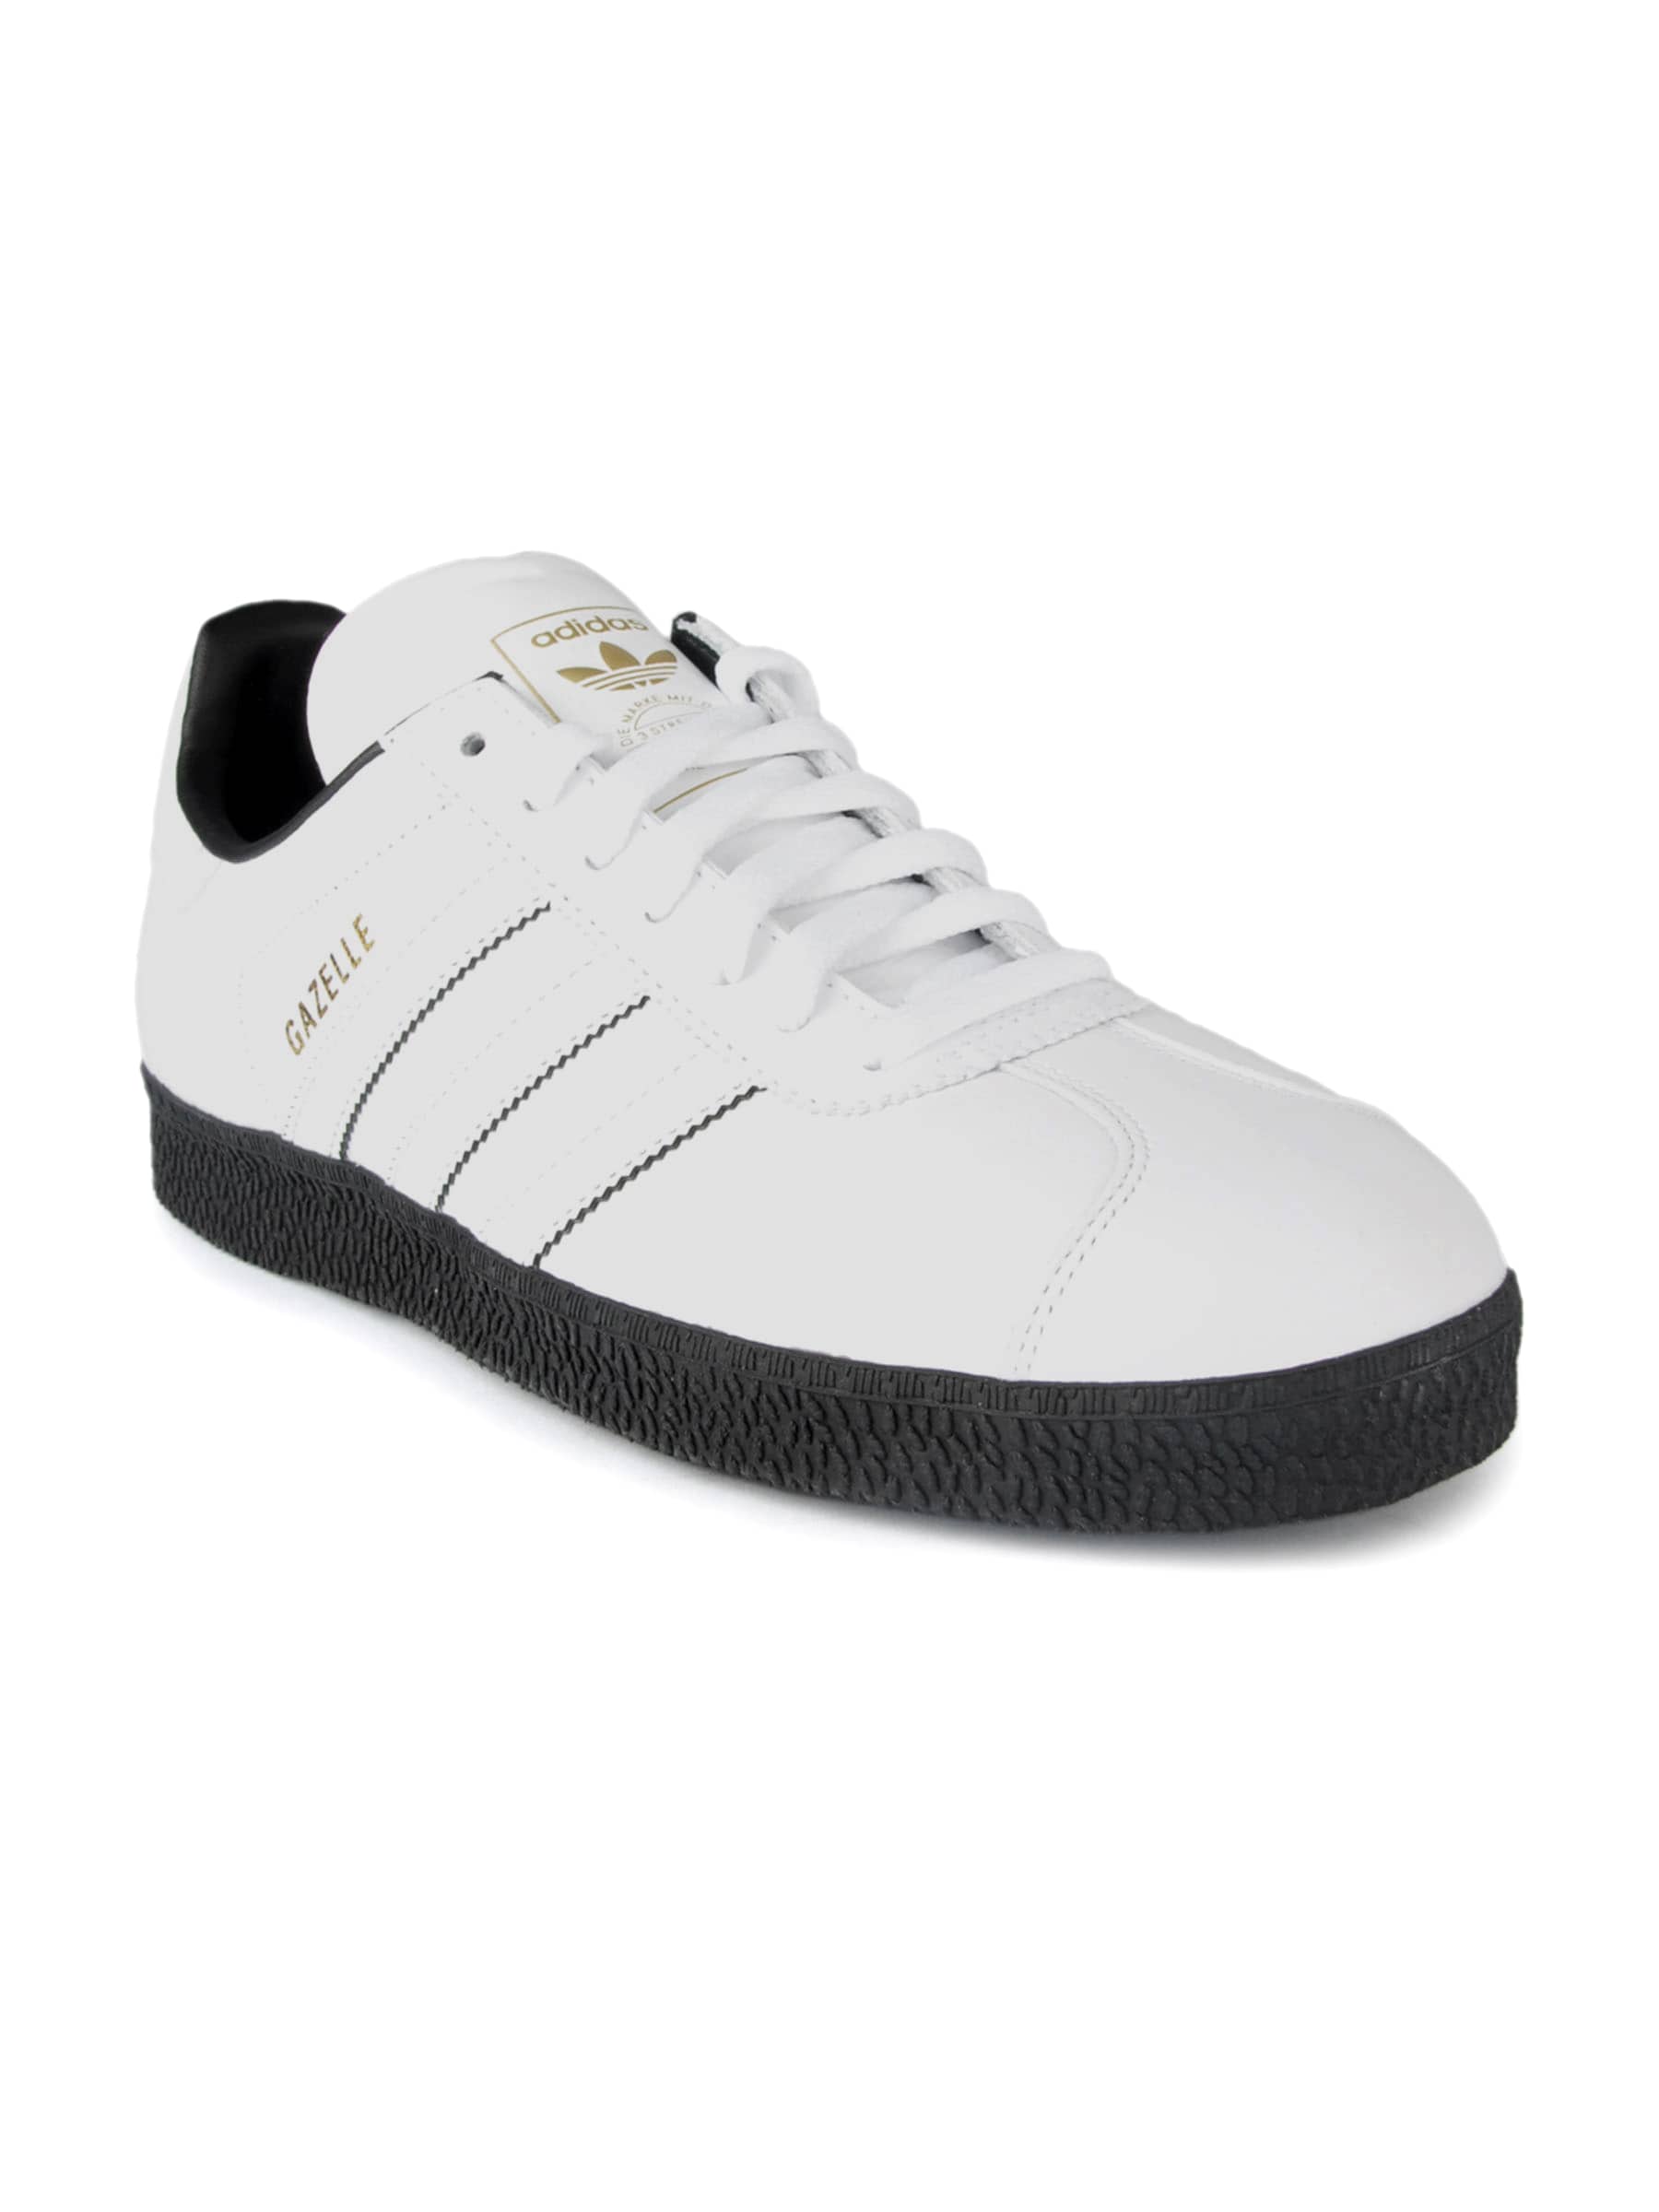 ADIDAS Originals Men Gazelle 2 White Casual Shoes